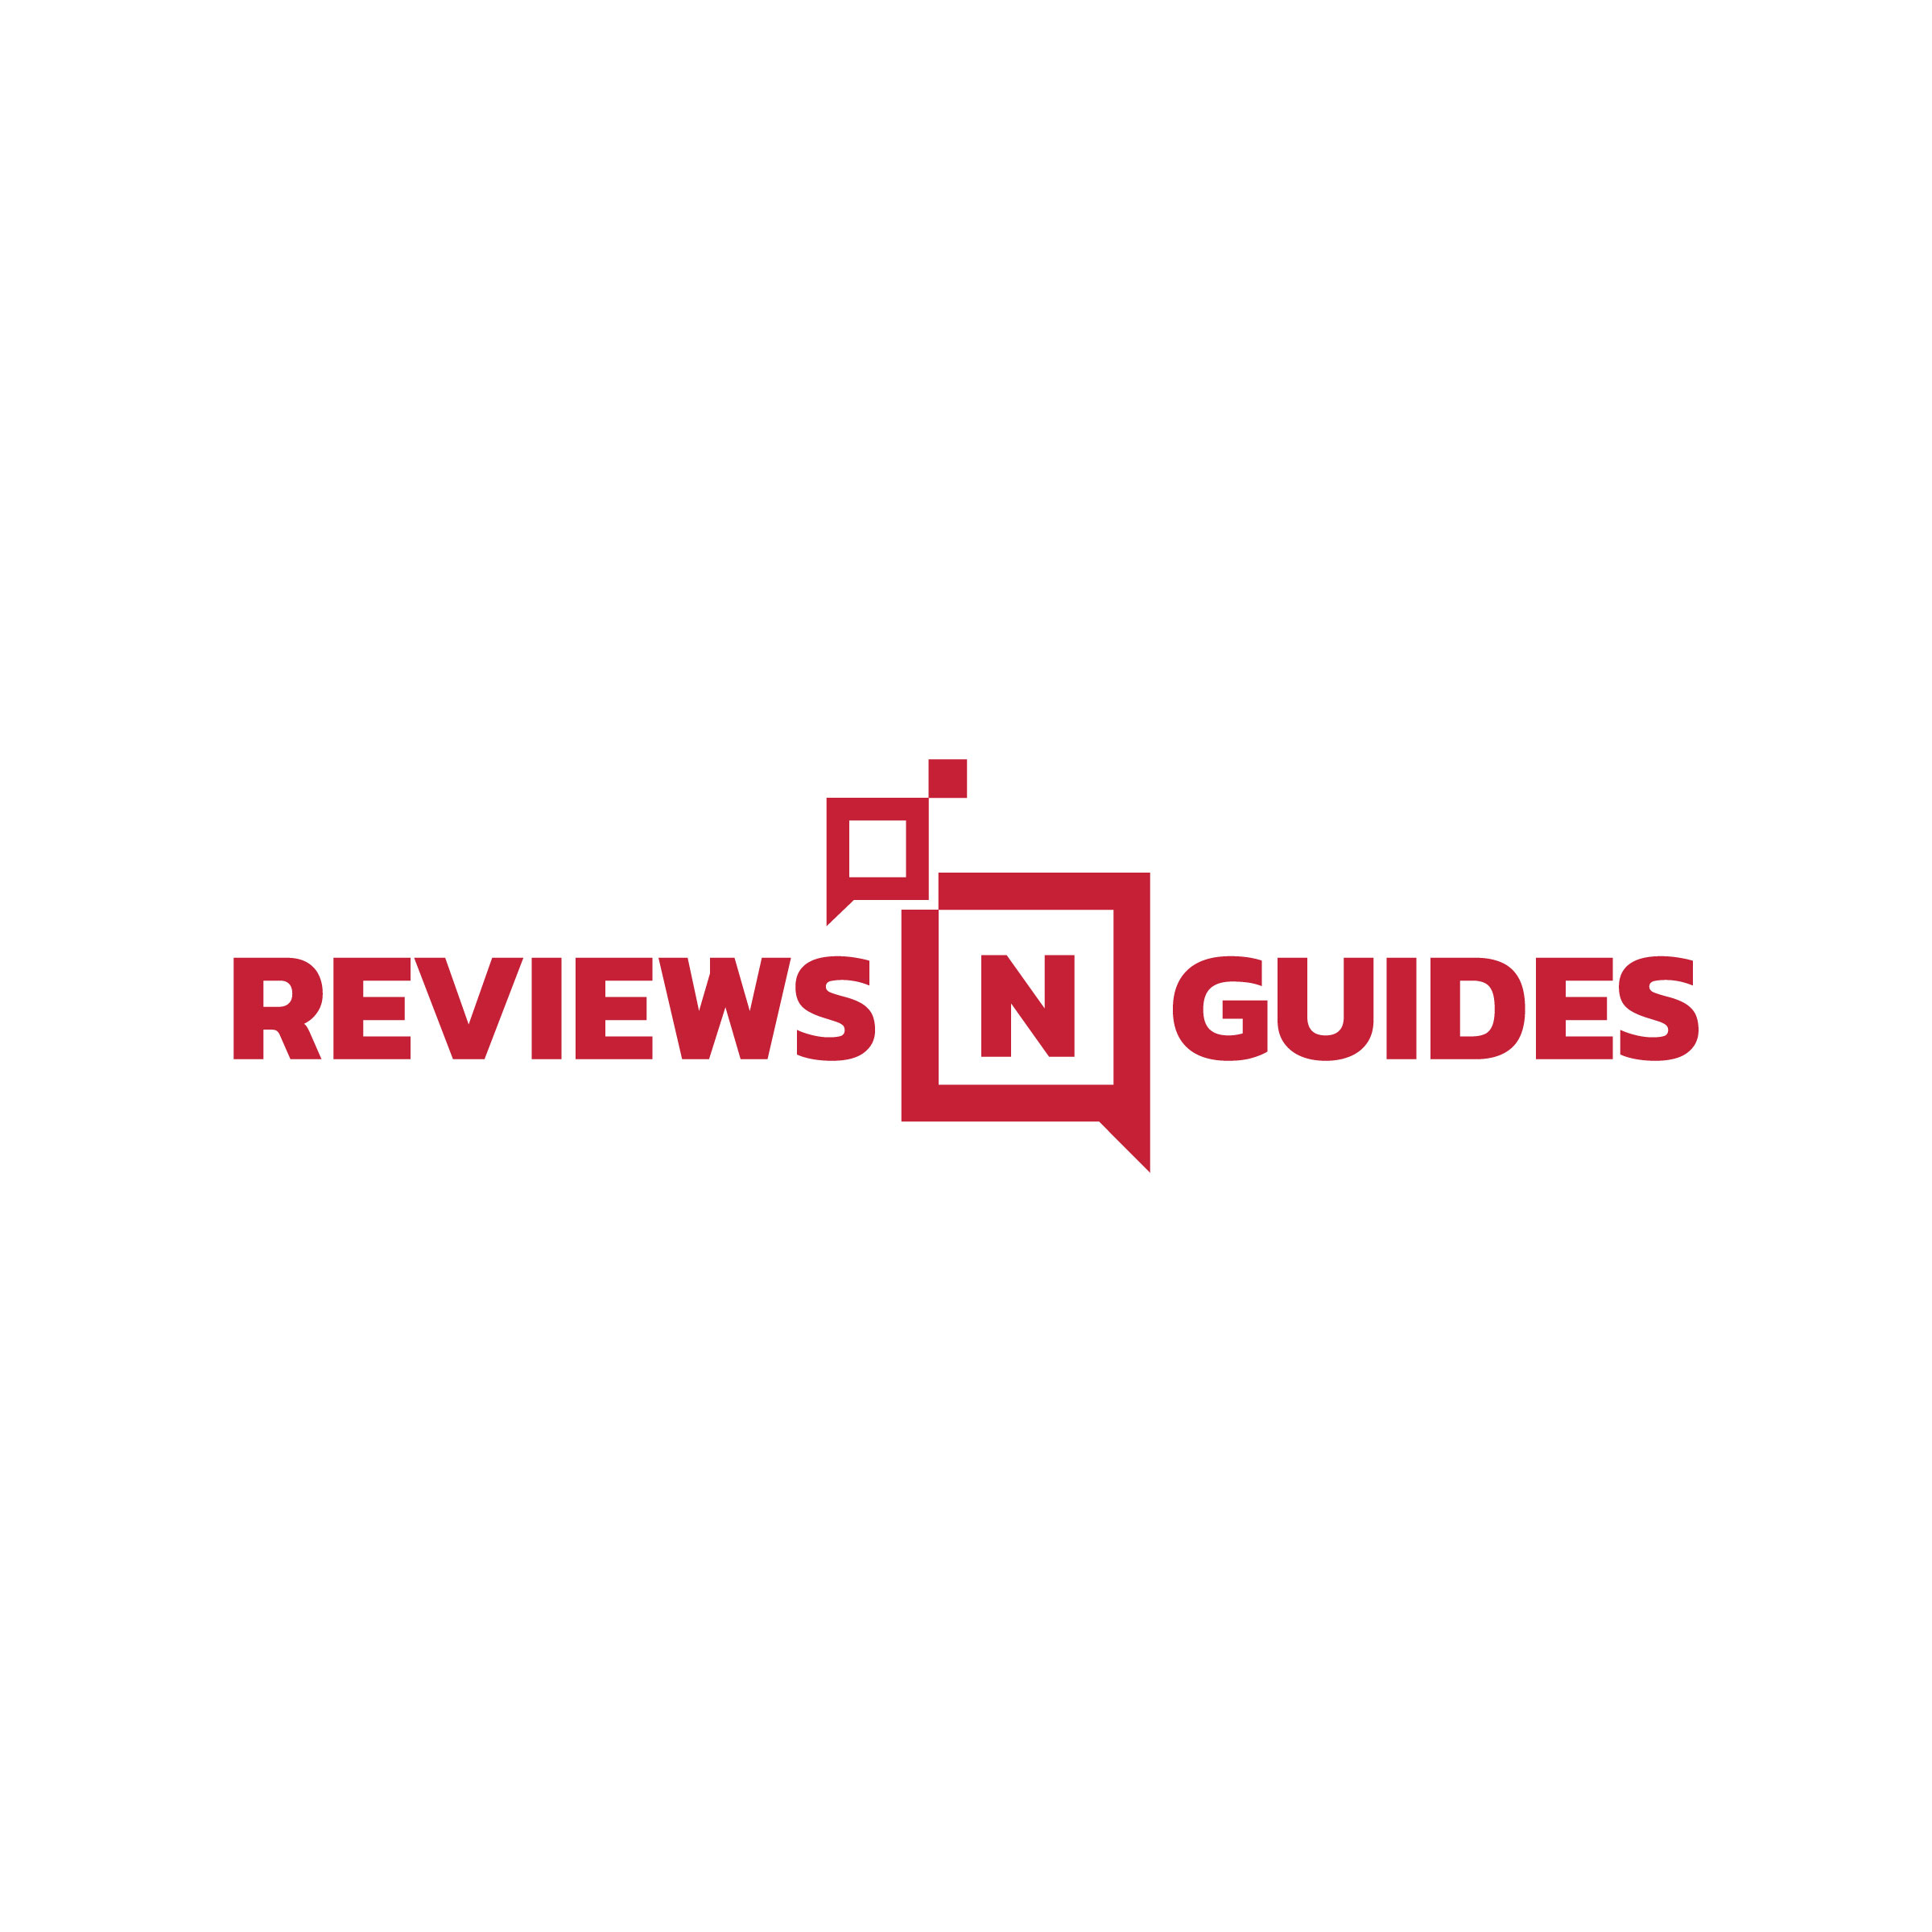 Reviews-N-Guide-Logo-2400-2400-Red-White-BG